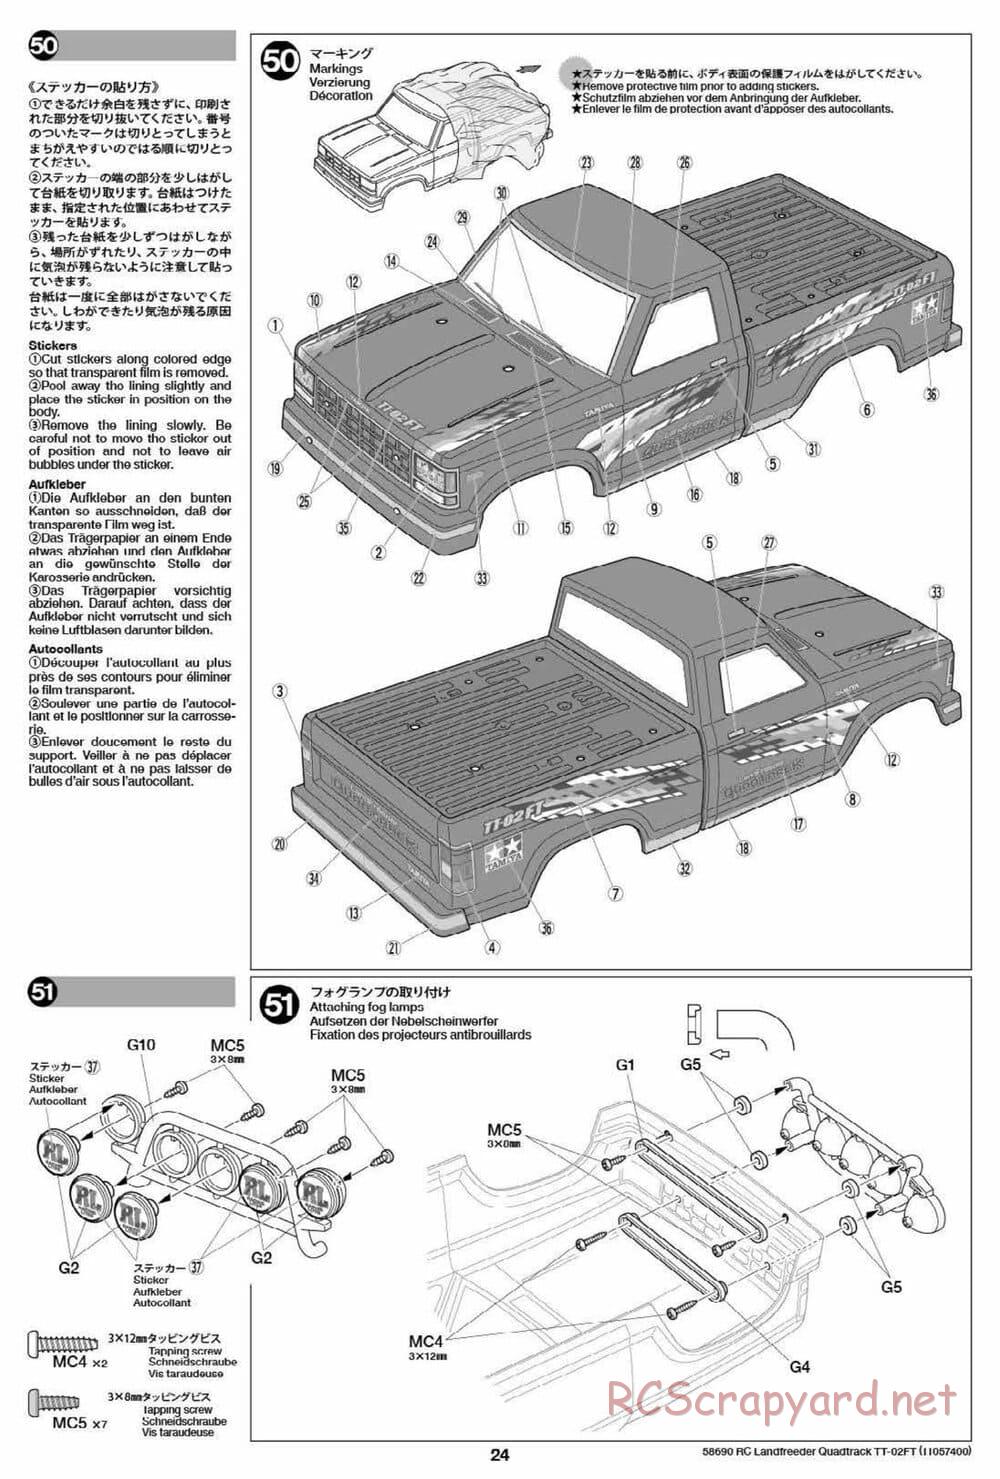 Tamiya - Landfreeder Quadtrack - TT-02FT Chassis - Manual - Page 24